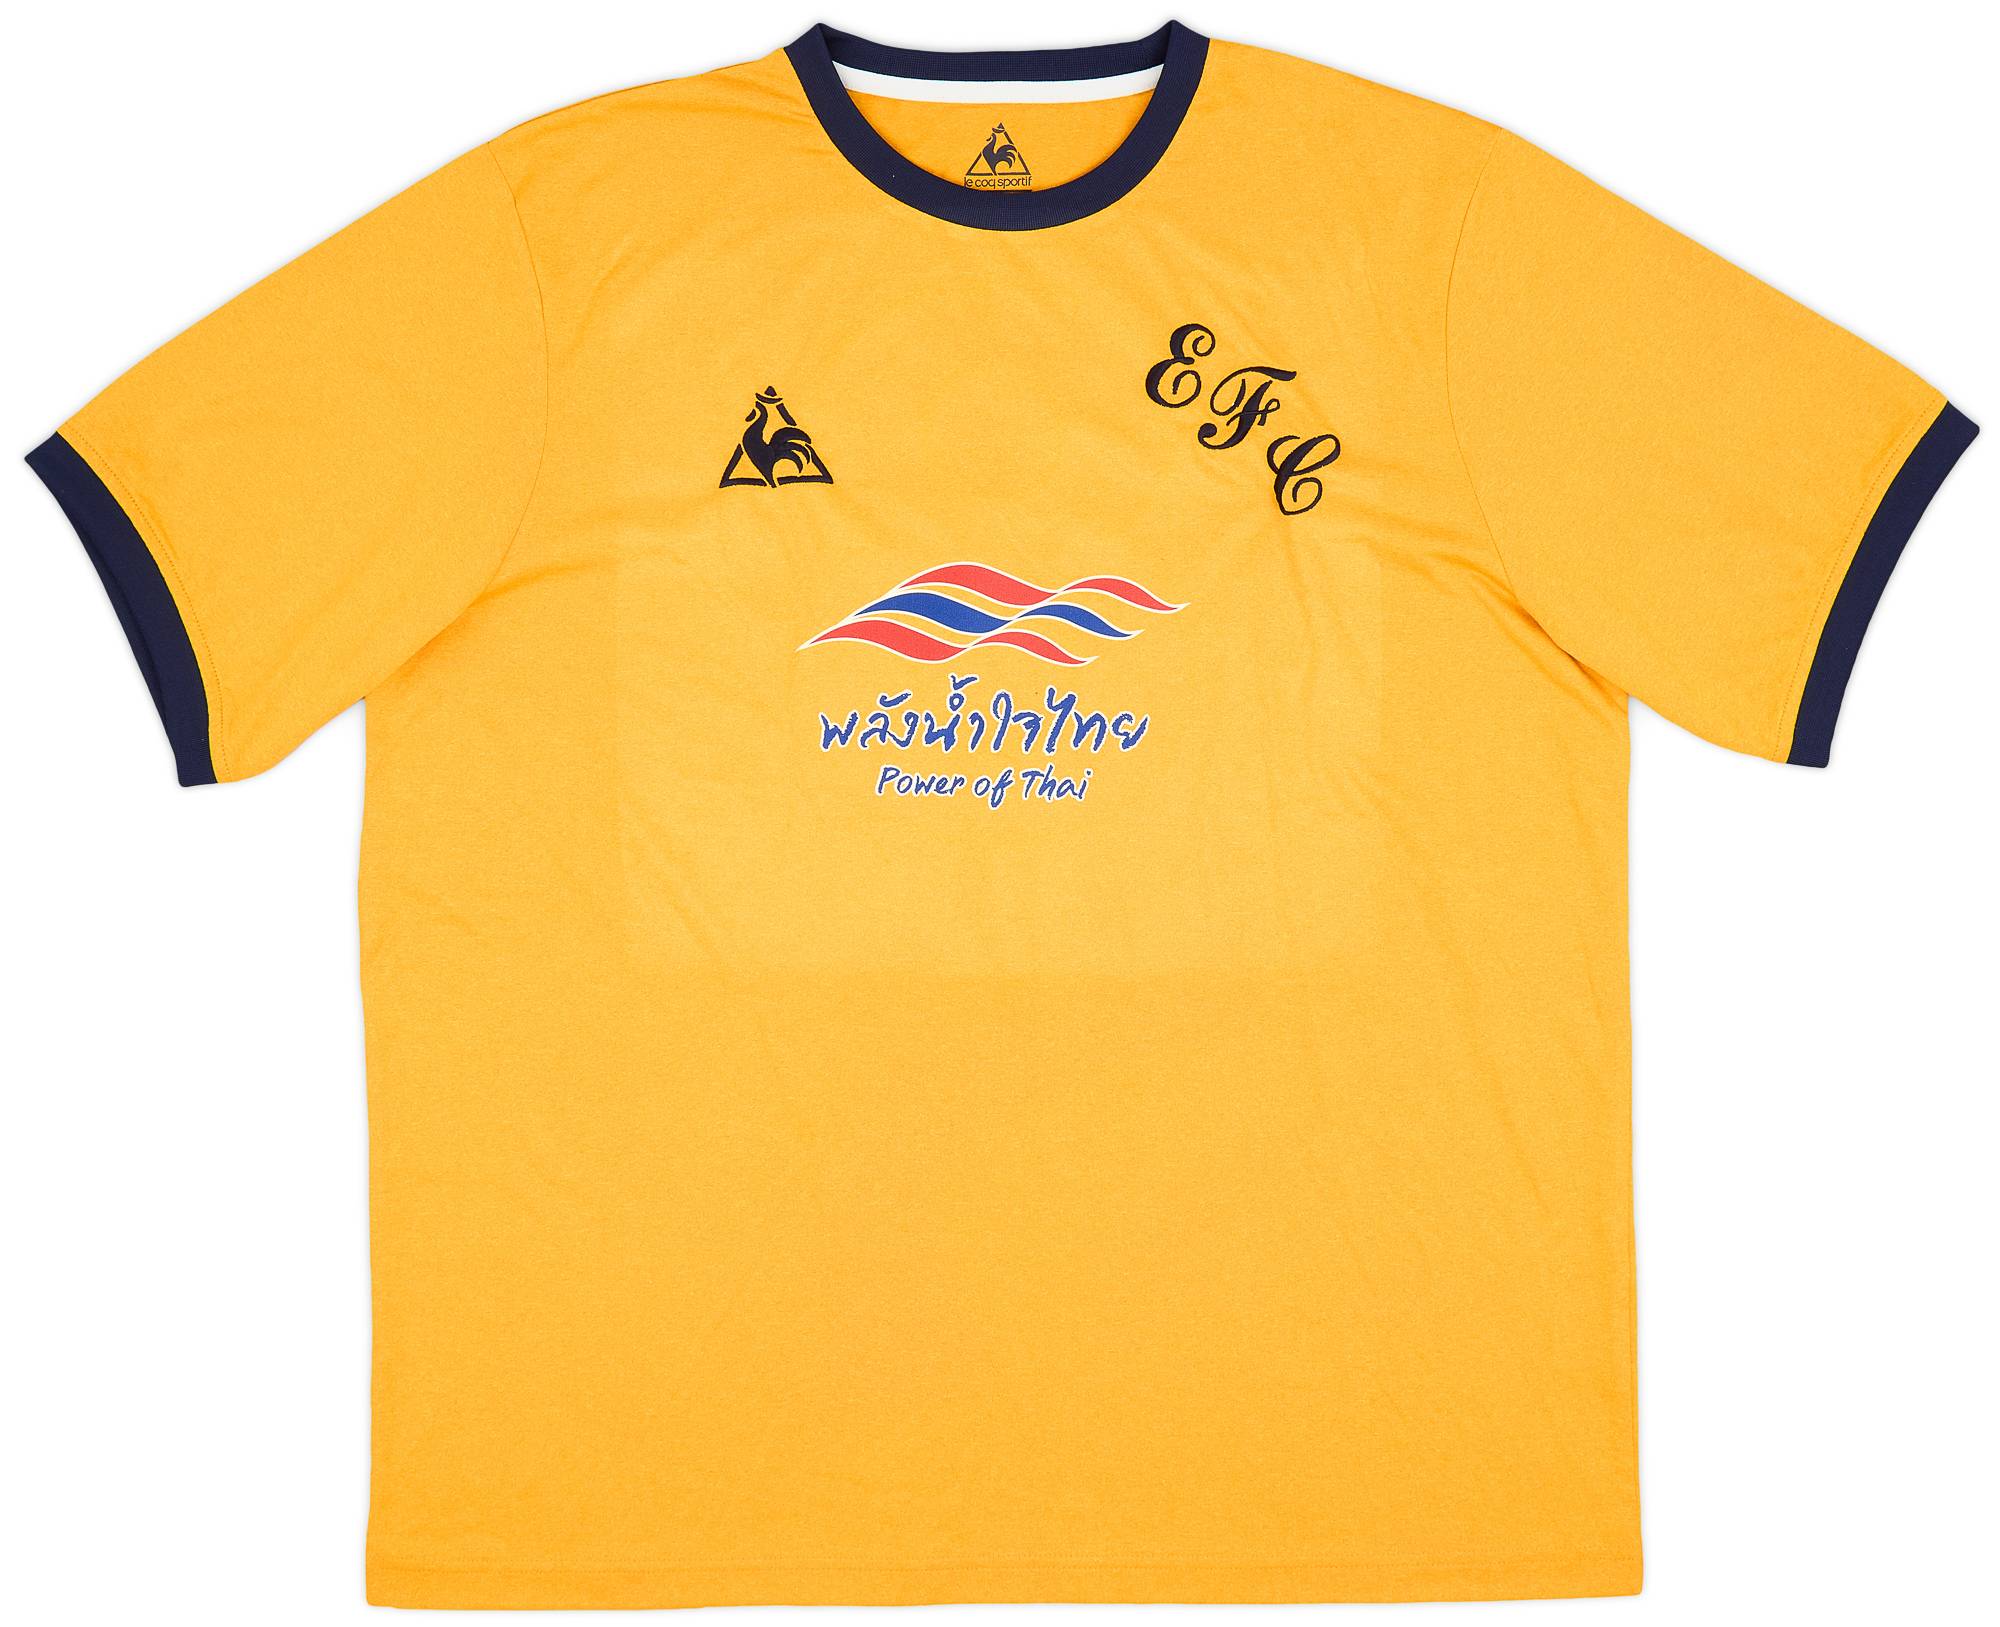 2011 Everton Retro Away Shirt #8 - 9/10 - (XL)